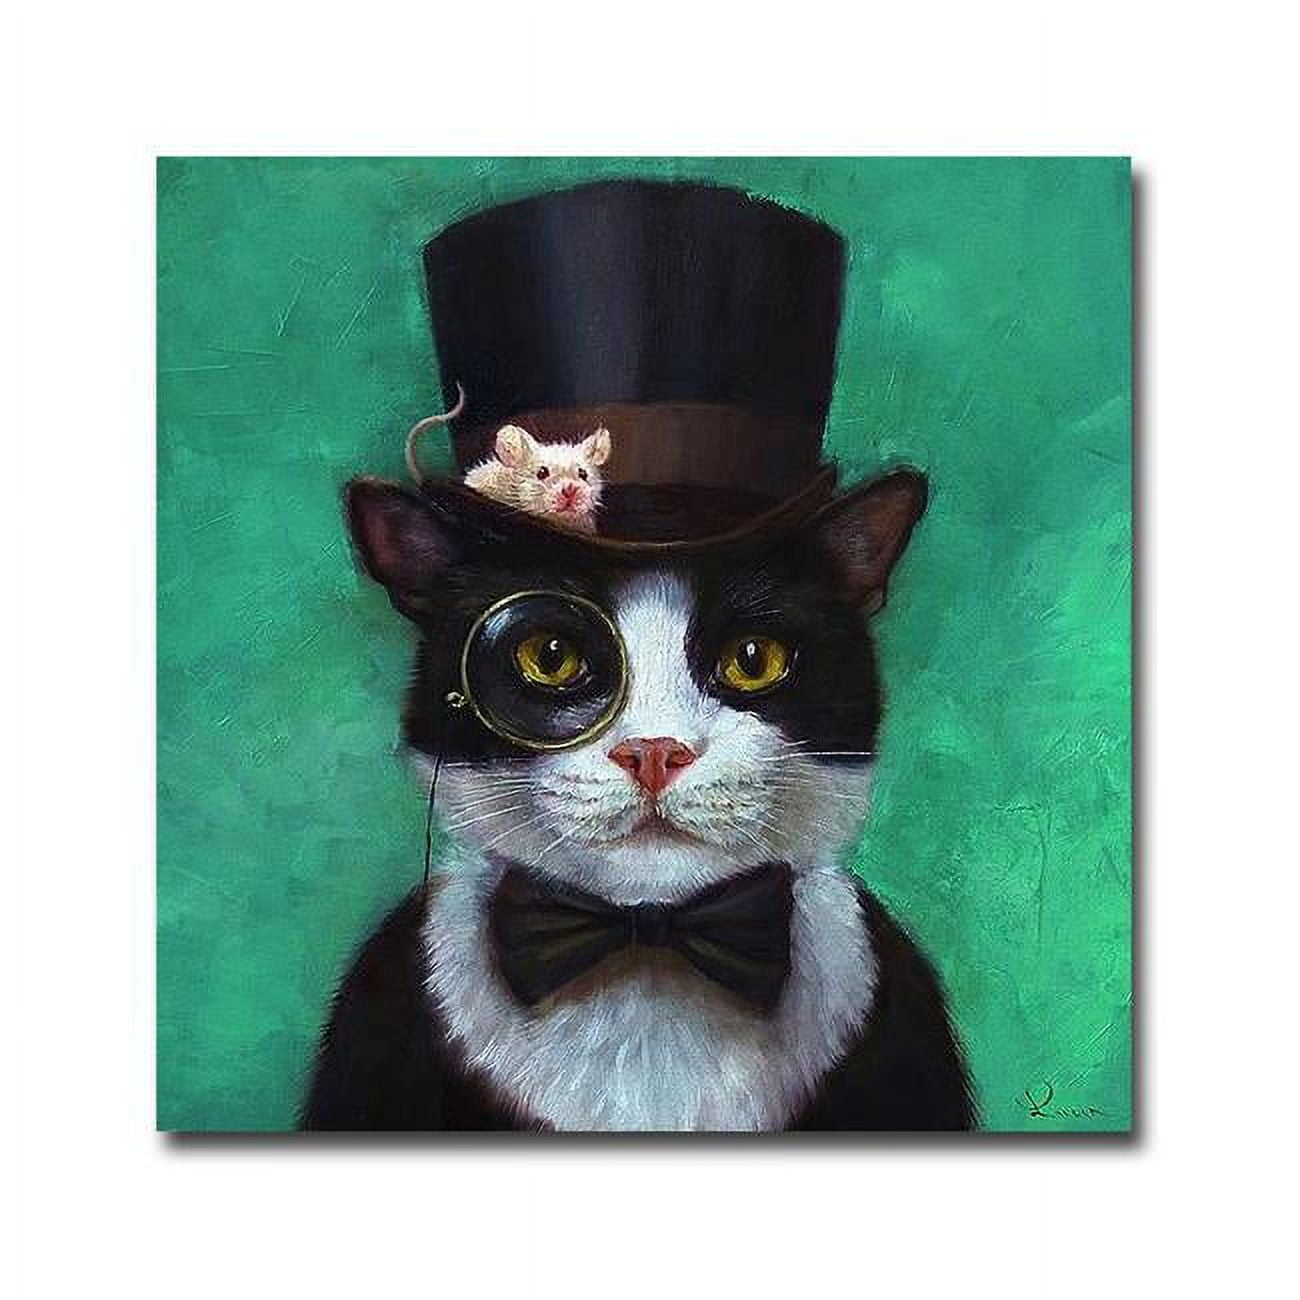 1212k568ig Tuxedo Cat By Lucia Heffernan Premium Gallery-wrapped Canvas Giclee Art - 12 X 12 X 1.5 In.